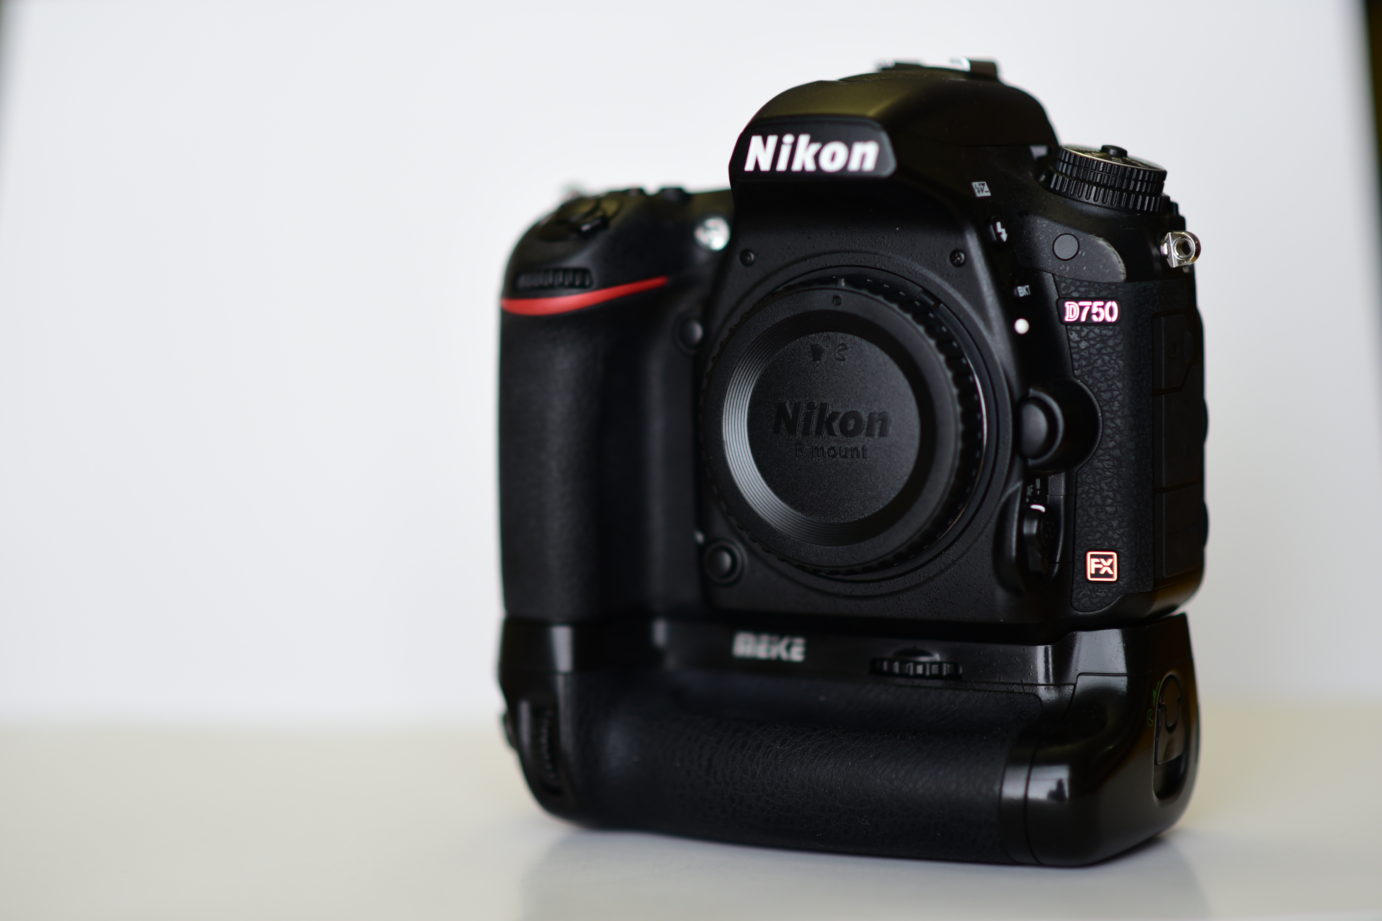 Choosing a second shooter Nikon d750